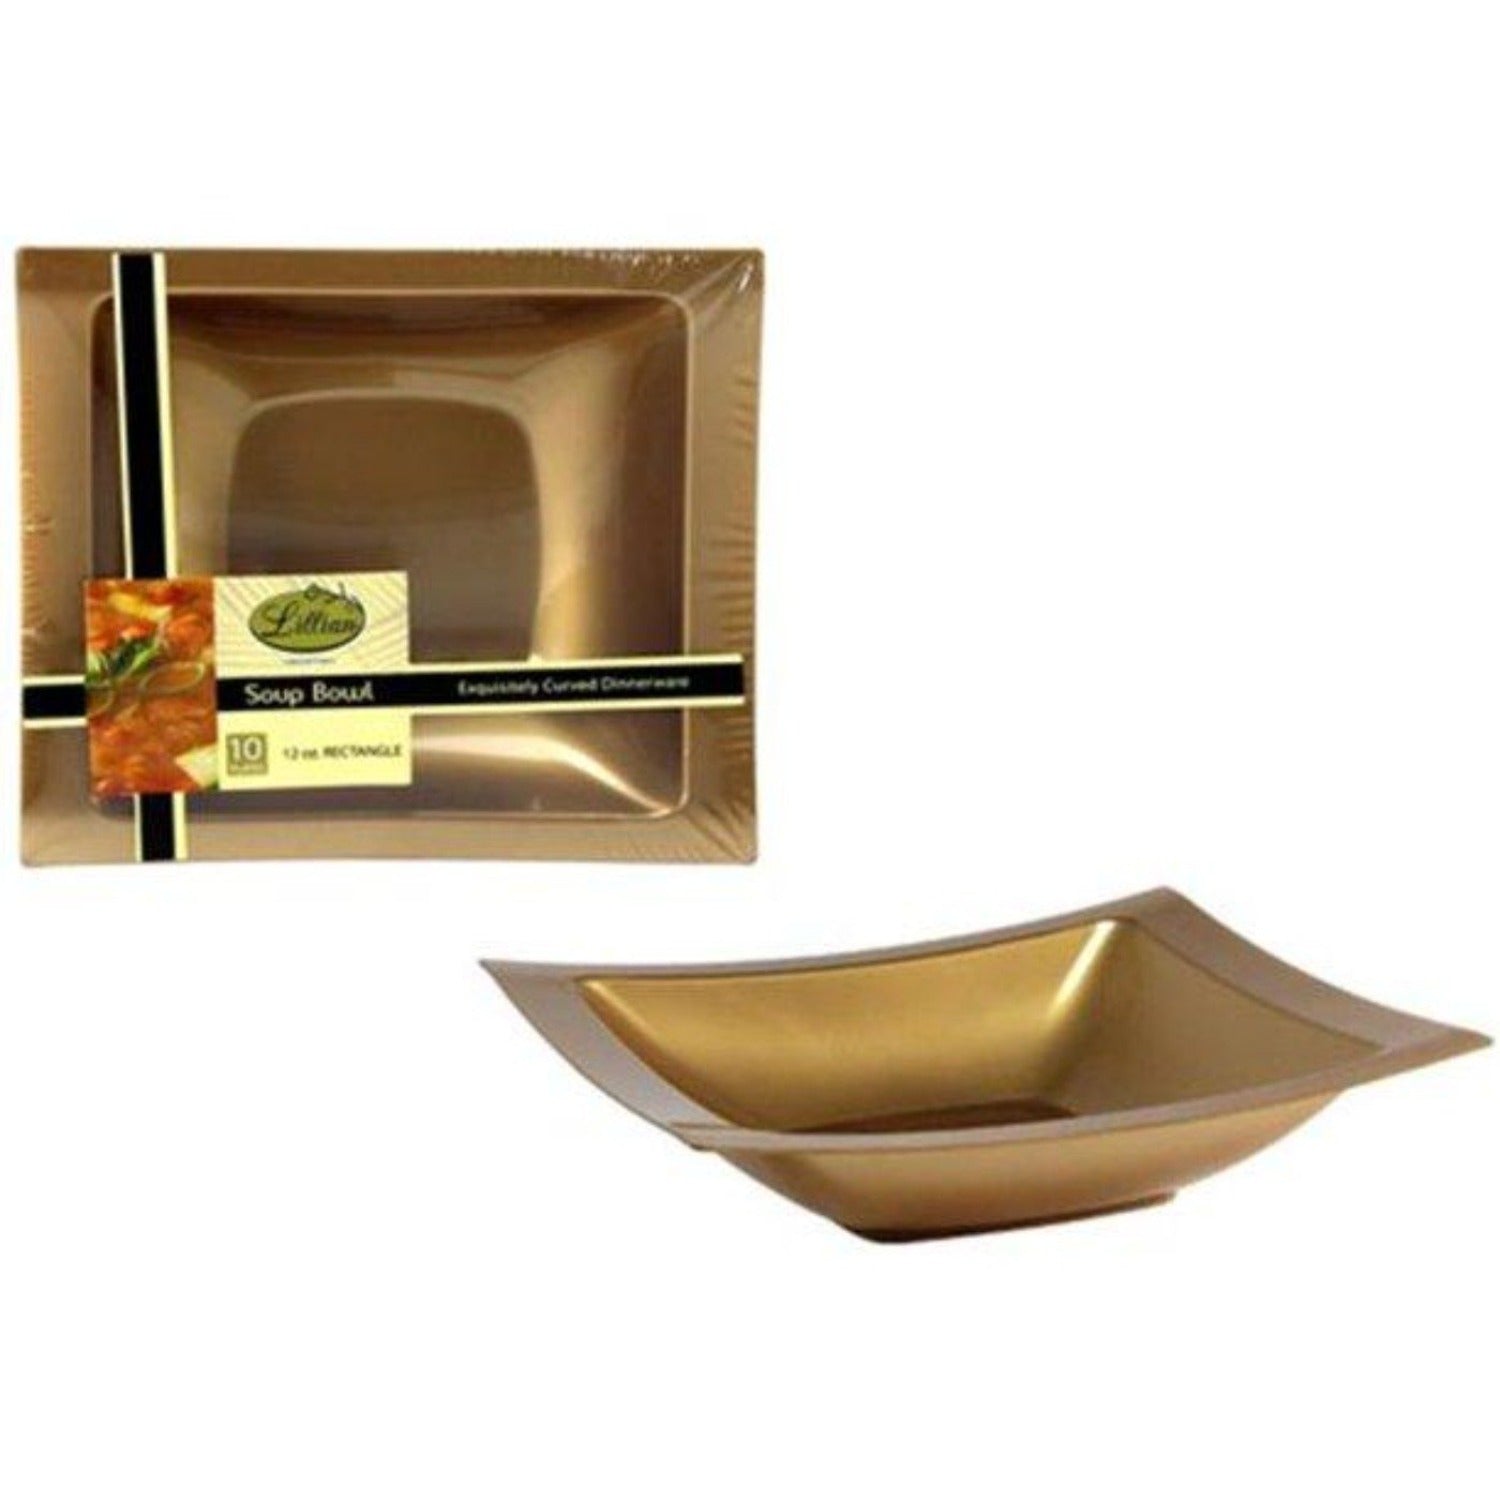 Rectangular Gold 5oz Plastic Dessert Bowls Bowls Lillian   